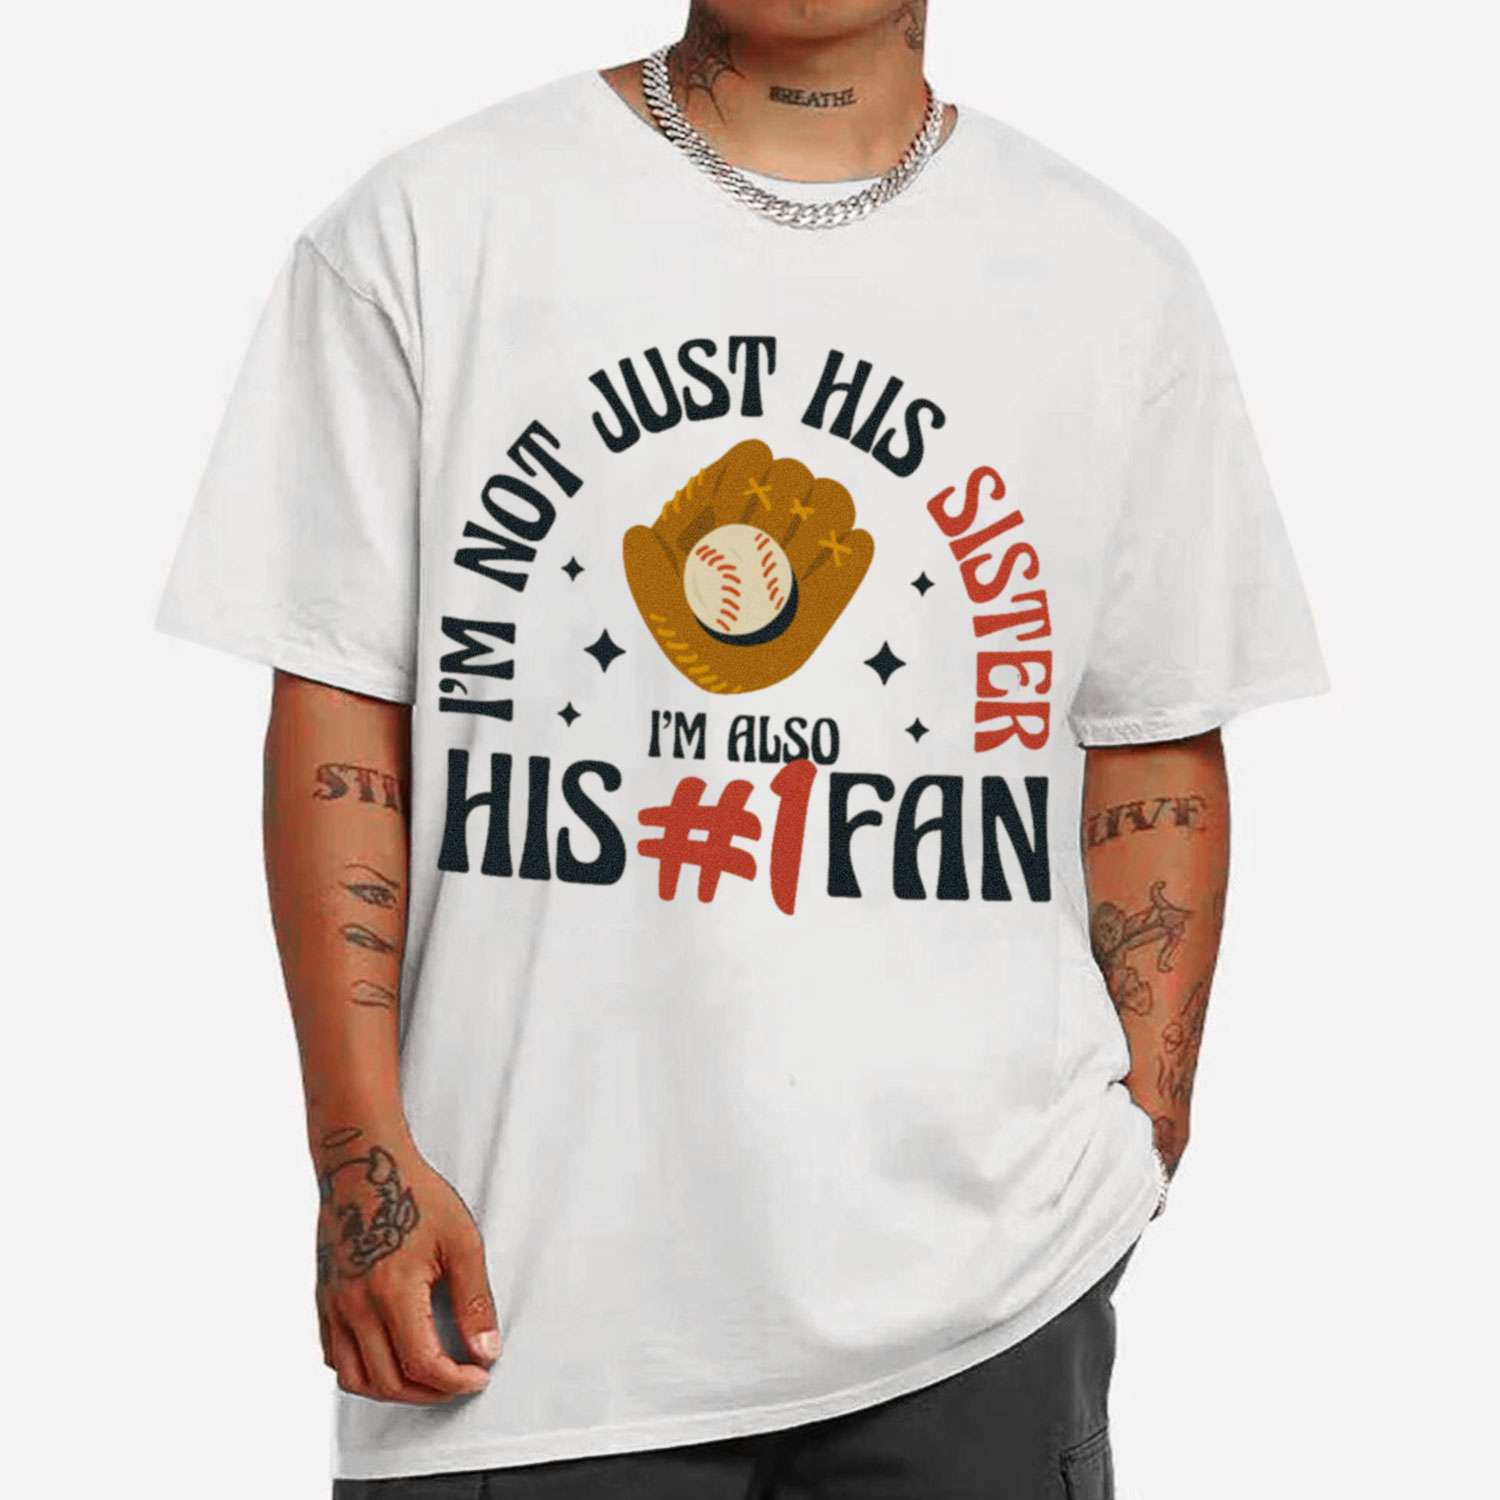 Baseball Sister And Fan T-shirt